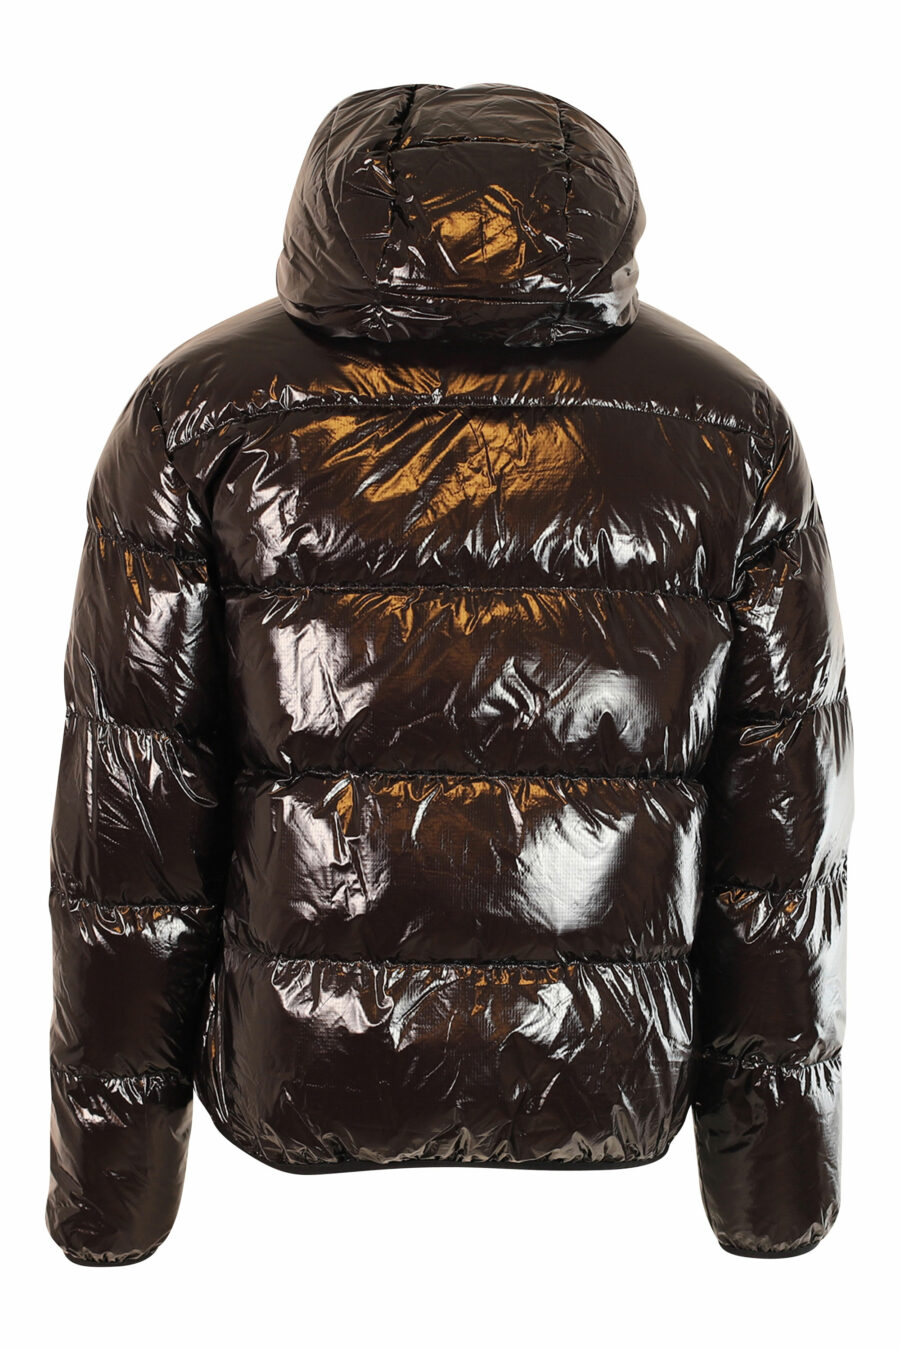 Black shiny puff kaban puffer jacket with high collar and mini-logo - 8054148016357 3